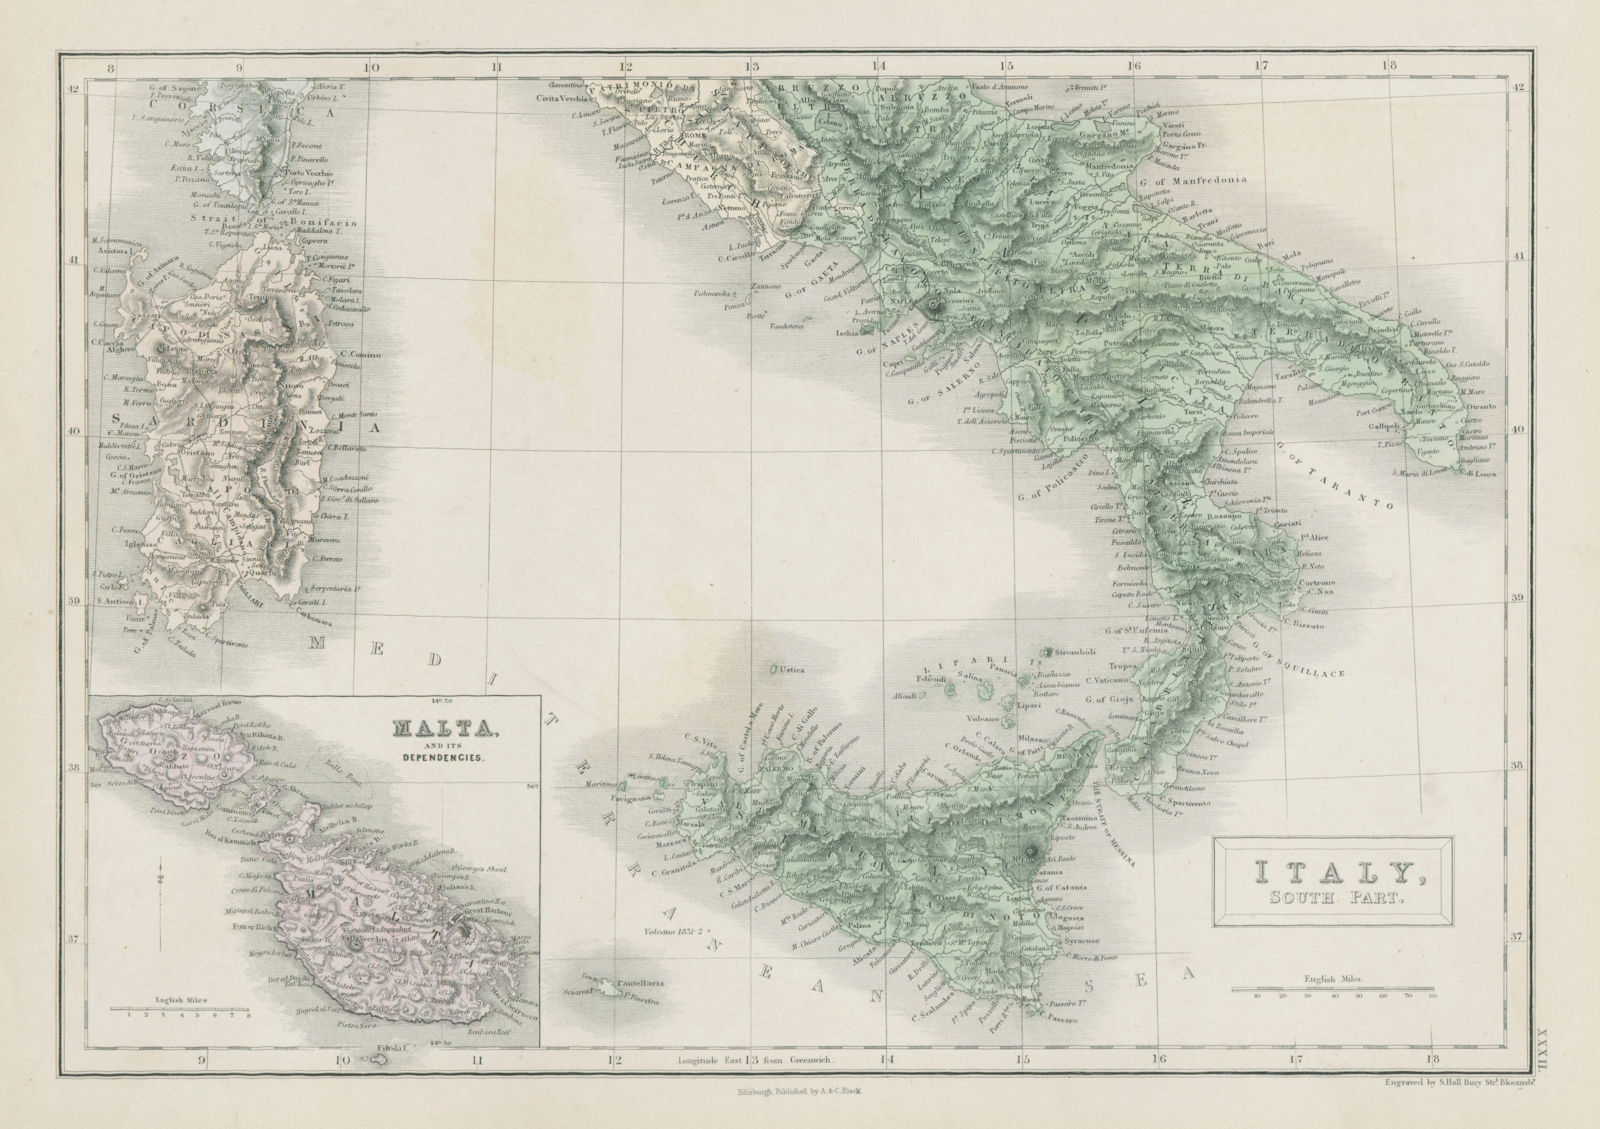 Italy, south part. Inset Malta. Sardinia Sicily. SIDNEY HALL 1856 old map